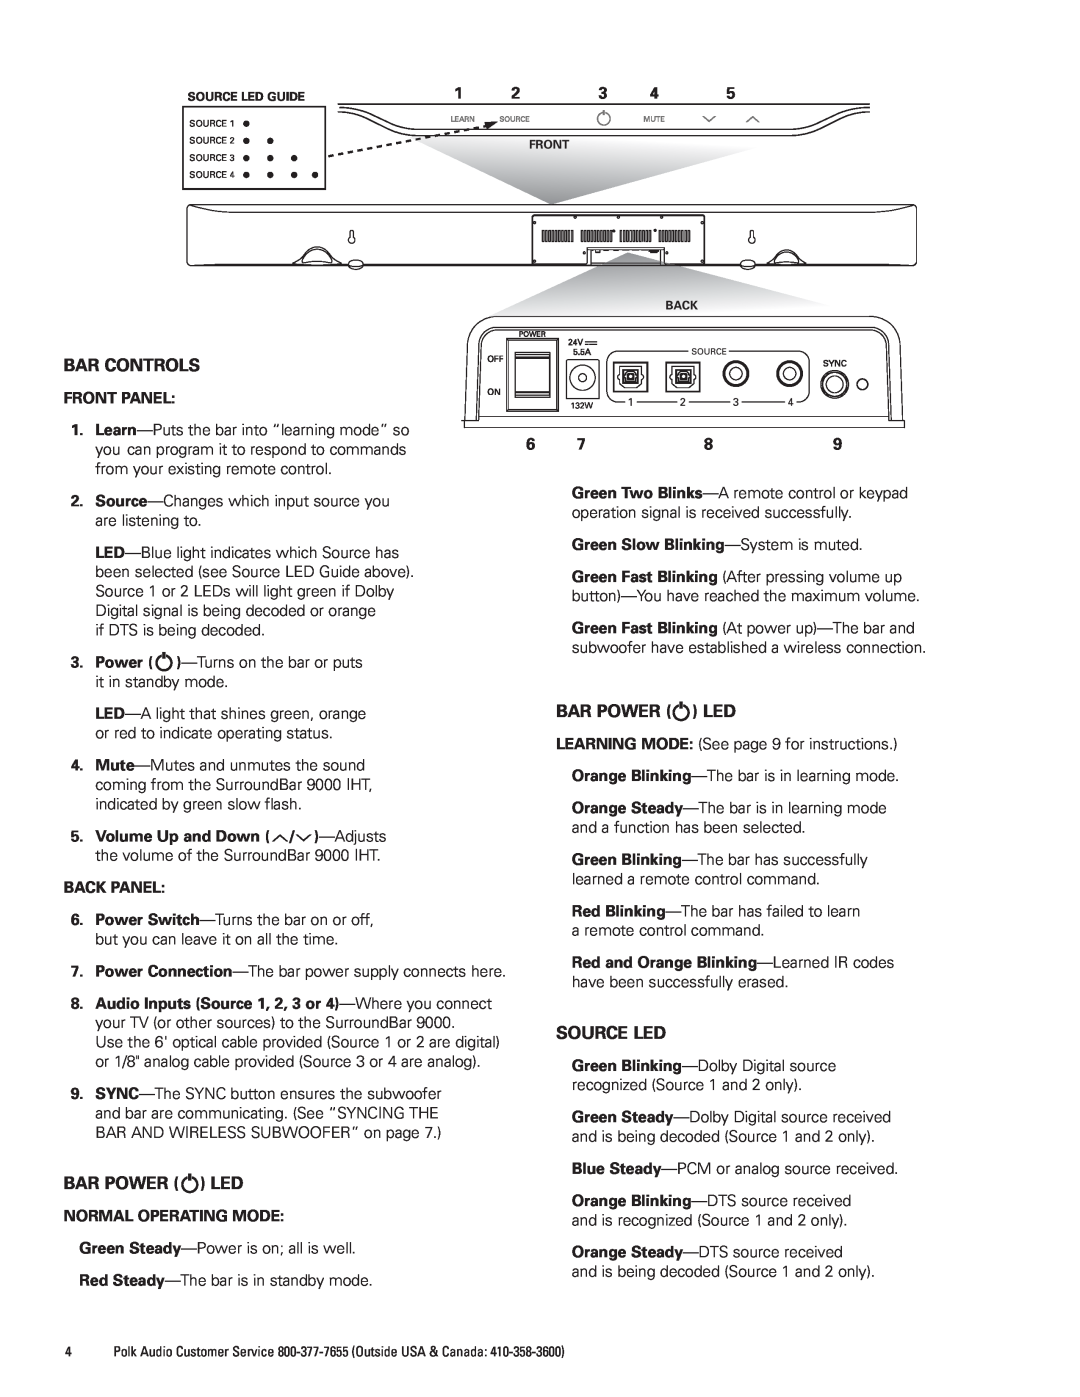 Polk Audio 9000 manual Bar Controls, Bar Power Led, Source Led 